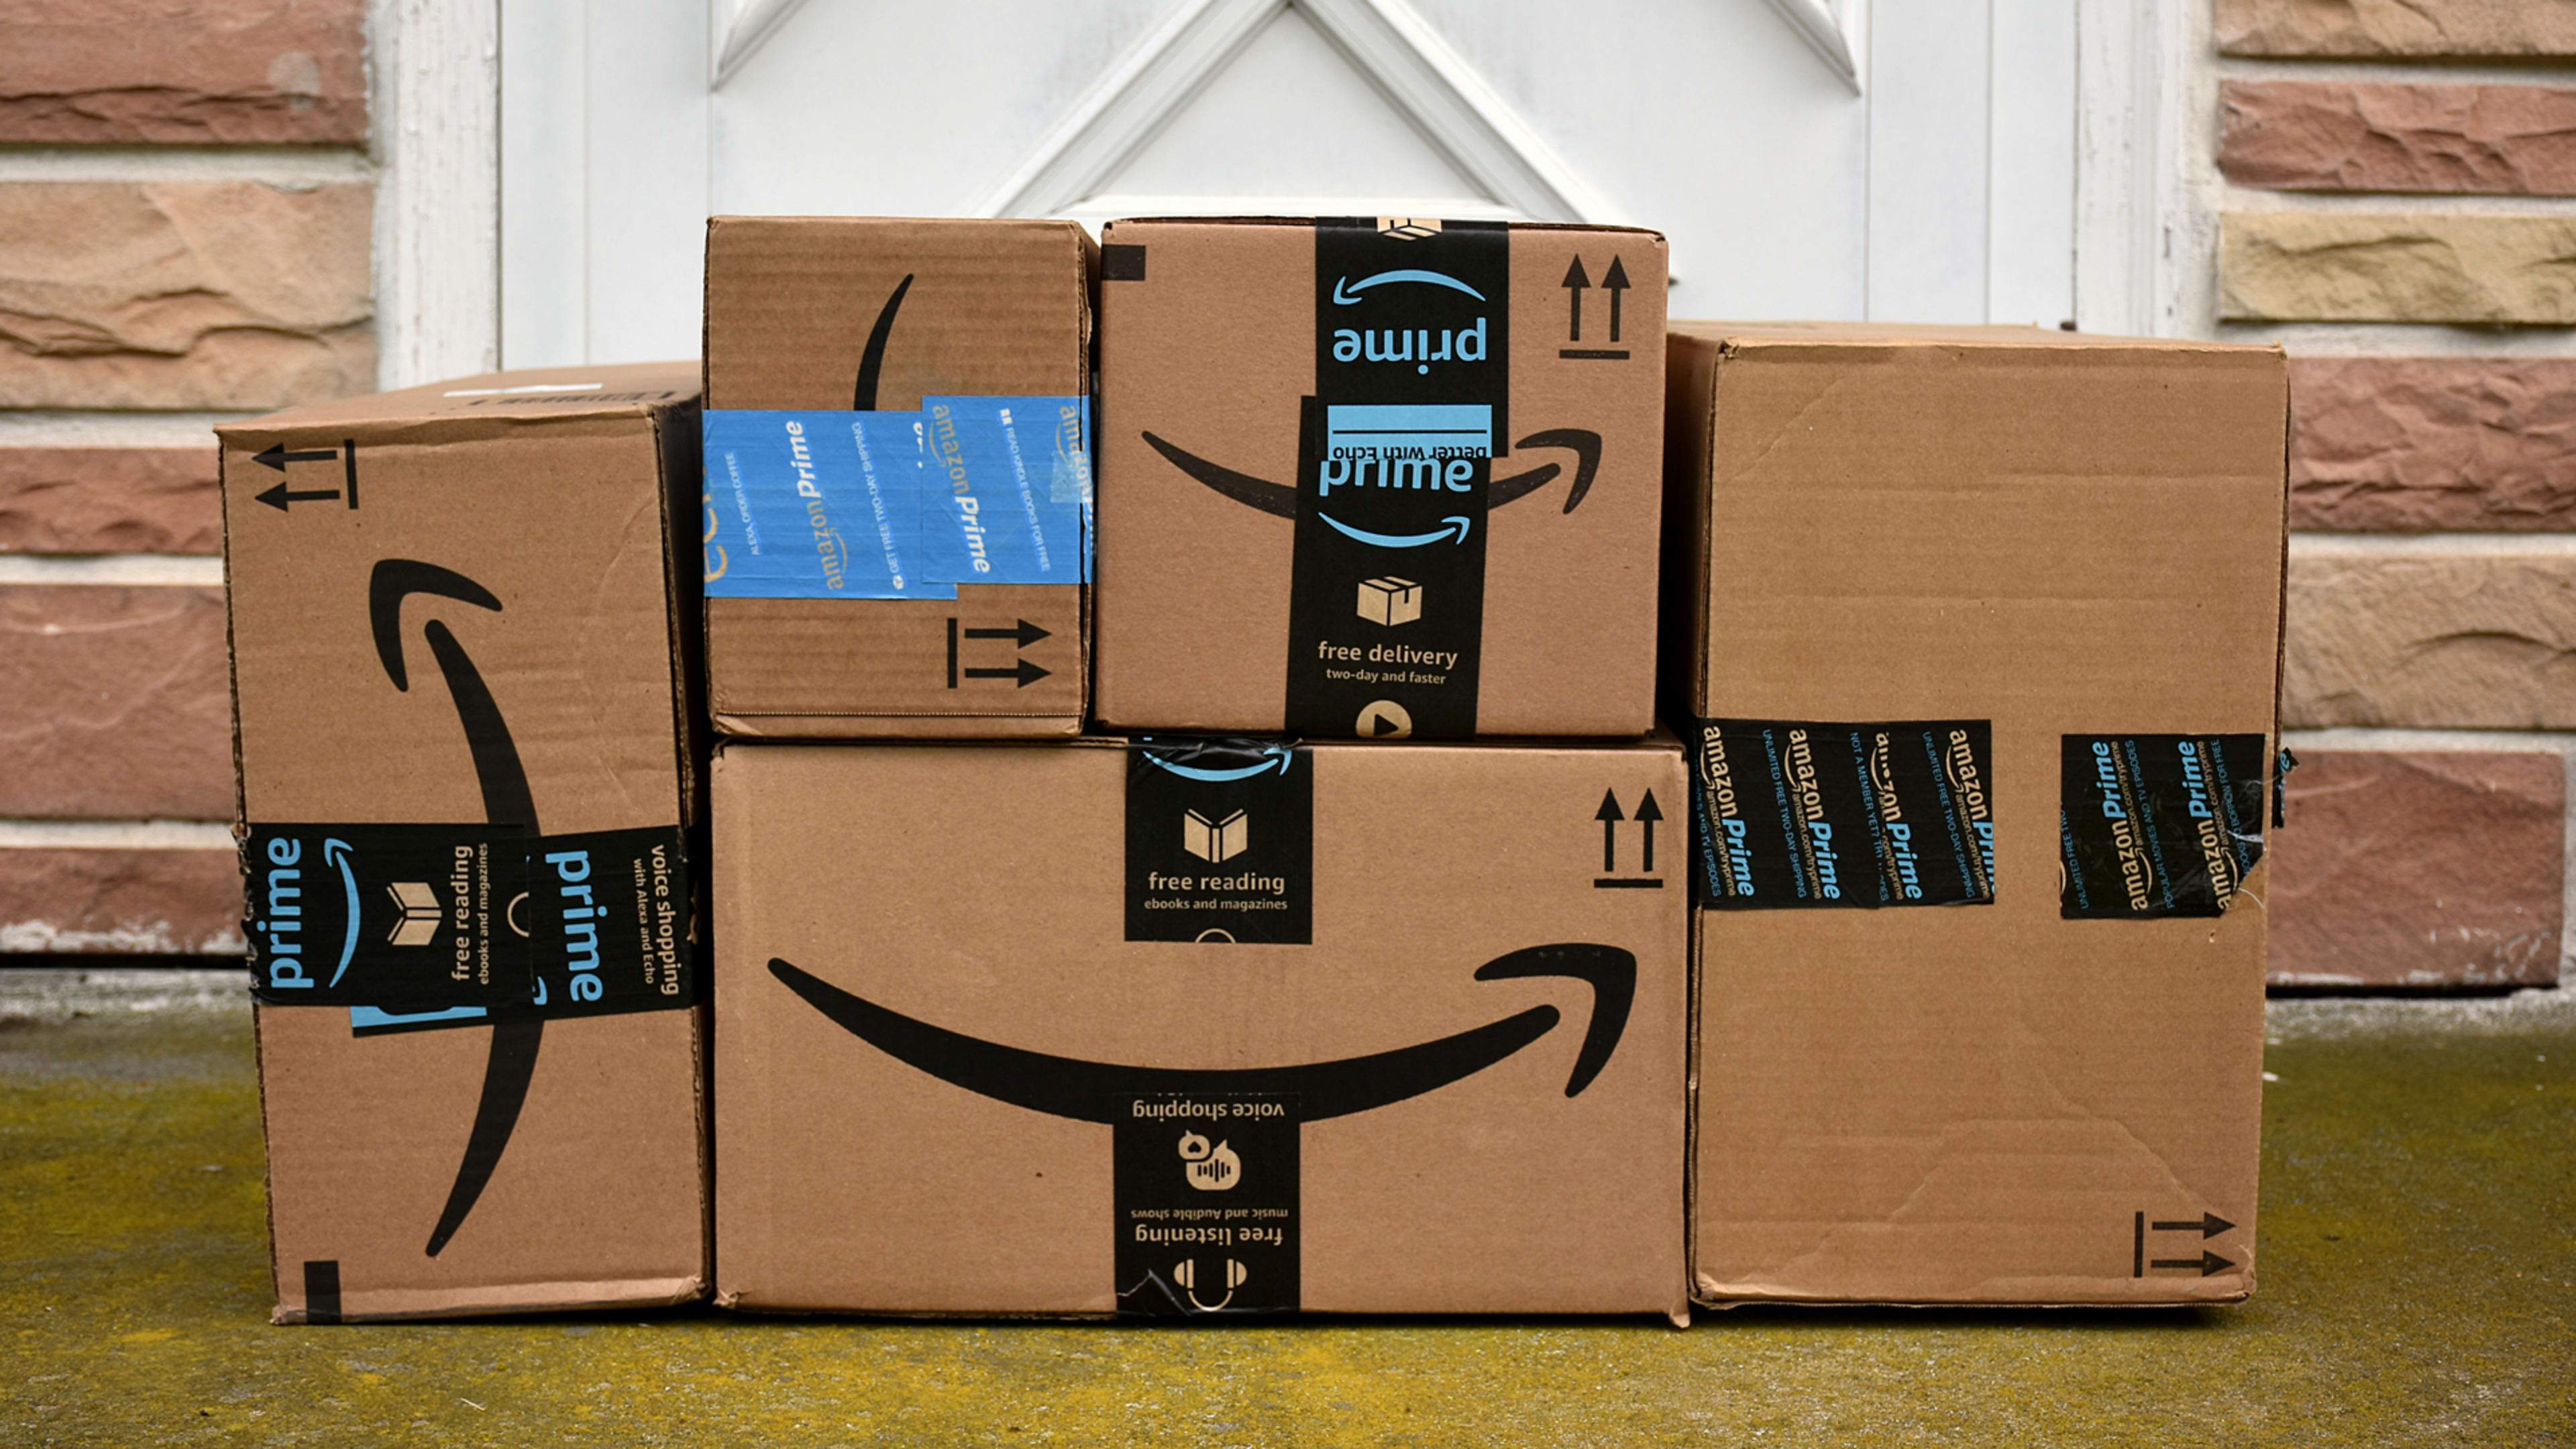 Amazon may be a trillion dollar company by 2022